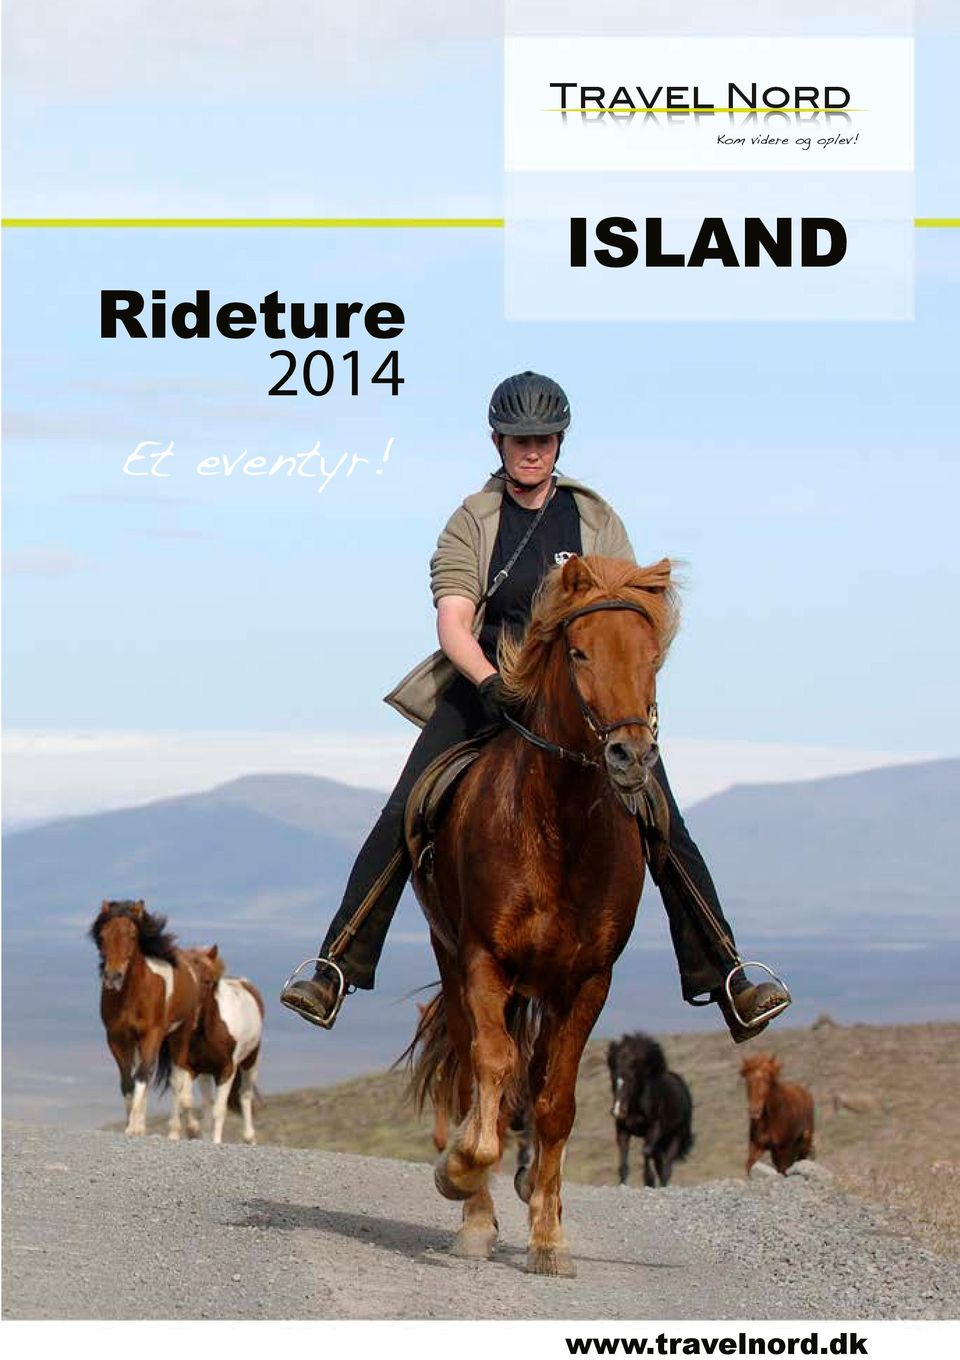 Rideture 2014 ISLAND